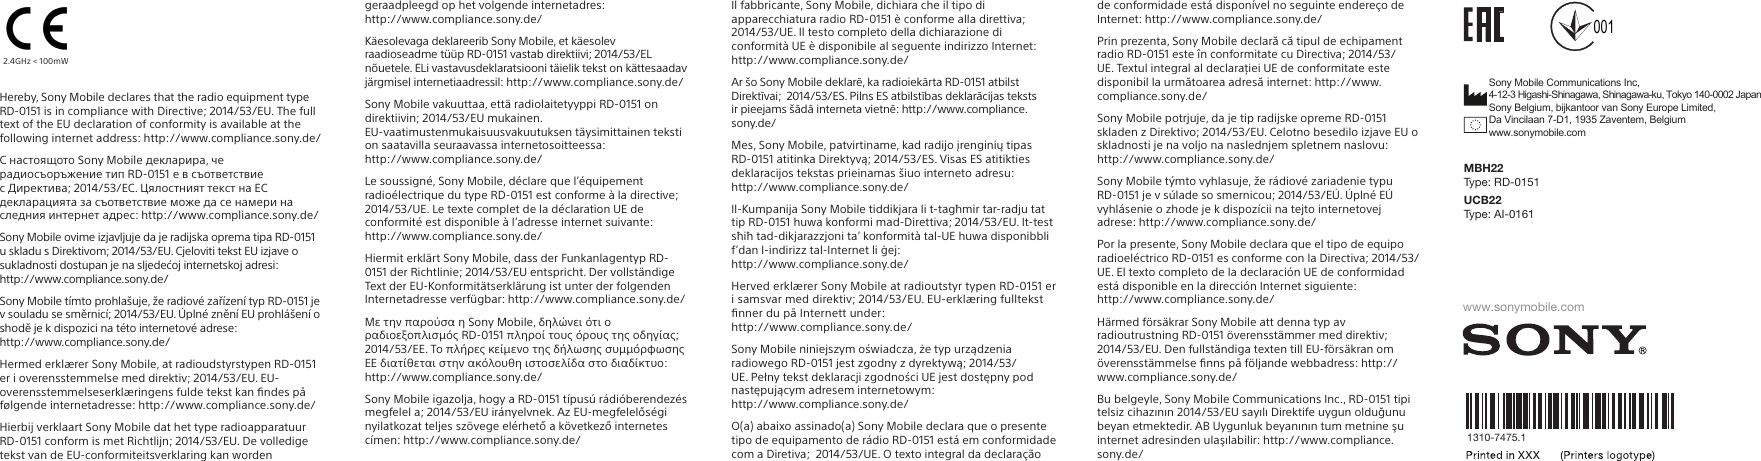 geraadpleegd op het volgende internetadres:  http://www.compliance.sony.de/Käesolevaga deklareerib Sony Mobile, et käesolev raadioseadme tüüp RD-0151 vastab direktiivi; 2014/53/EL nõuetele. ELi vastavusdeklaratsiooni täielik tekst on kättesaadav järgmisel internetiaadressil: http://www.compliance.sony.de/Sony Mobile vakuuttaa, että radiolaitetyyppi RD-0151 on direktiivin; 2014/53/EU mukainen.  EU-vaatimustenmukaisuusvakuutuksen täysimittainen teksti on saatavilla seuraavassa internetosoitteessa:  http://www.compliance.sony.de/Le soussigné, Sony Mobile, déclare que l’équipement radioélectrique du type RD-0151 est conforme à la directive; 2014/53/UE. Le texte complet de la déclaration UE de conformité est disponible à l’adresse internet suivante:  http://www.compliance.sony.de/Hiermit erklärt Sony Mobile, dass der Funkanlagentyp RD-0151 der Richtlinie; 2014/53/EU entspricht. Der vollständige Text der EU-Konformitätserklärung ist unter der folgenden Internetadresse verfügbar: http://www.compliance.sony.de/Με την παρούσα η Sony Mobile, δηλώνει ότι ο ραδιοεξοπλισμός RD-0151 πληροί τους όρους της οδηγίας; 2014/53/ΕΕ. Το πλήρες κείμενο της δήλωσης συμμόρφωσης ΕΕ διατίθεται στην ακόλουθη ιστοσελίδα στο διαδίκτυο:  http://www.compliance.sony.de/Sony Mobile igazolja, hogy a RD-0151 típusú rádióberendezés megfelel a; 2014/53/EU irányelvnek. Az EU-megfelelőségi nyilatkozat teljes szövege elérhető a következő internetes címen: http://www.compliance.sony.de/Il fabbricante, Sony Mobile, dichiara che il tipo di apparecchiatura radio RD-0151 è conforme alla direttiva;  2014/53/UE. Il testo completo della dichiarazione di conformità UE è disponibile al seguente indirizzo Internet: http://www.compliance.sony.de/Ar šo Sony Mobile deklarē, ka radioiekārta RD-0151 atbilst Direktīvai;  2014/53/ES. Pilns ES atbilstības deklarācijas teksts ir pieejams šādā interneta vietnē: http://www.compliance.sony.de/Mes, Sony Mobile, patvirtiname, kad radijo įrenginių tipas RD-0151 atitinka Direktyvą; 2014/53/ES. Visas ES atitikties deklaracijos tekstas prieinamas šiuo interneto adresu:  http://www.compliance.sony.de/Il-Kumpanija Sony Mobile tiddikjara li t-tagħmir tar-radju tat tip RD-0151 huwa konformi mad-Direttiva; 2014/53/EU. It-test sħiħ tad-dikjarazzjoni ta’ konformità tal-UE huwa disponibbli f’dan l-indirizz tal-Internet li ġej:  http://www.compliance.sony.de/Herved erklærer Sony Mobile at radioutstyr typen RD-0151 er i samsvar med direktiv; 2014/53/EU. EU-erklæring fulltekst ﬁnner du på Internett under:  http://www.compliance.sony.de/Sony Mobile niniejszym oświadcza, że typ urządzenia radiowego RD-0151 jest zgodny z dyrektywą; 2014/53/UE. Pełny tekst deklaracji zgodności UE jest dostępny pod następującym adresem internetowym:  http://www.compliance.sony.de/O(a) abaixo assinado(a) Sony Mobile declara que o presente tipo de equipamento de rádio RD-0151 está em conformidade com a Diretiva;  2014/53/UE. O texto integral da declaração de conformidade está disponível no seguinte endereço de Internet: http://www.compliance.sony.de/Prin prezenta, Sony Mobile declară că tipul de echipament radio RD-0151 este în conformitate cu Directiva; 2014/53/UE. Textul integral al declarației UE de conformitate este disponibil la următoarea adresă internet: http://www.compliance.sony.de/Sony Mobile potrjuje, da je tip radijske opreme RD-0151 skladen z Direktivo; 2014/53/EU. Celotno besedilo izjave EU o skladnosti je na voljo na naslednjem spletnem naslovu: http://www.compliance.sony.de/Sony Mobile týmto vyhlasuje, že rádiové zariadenie typu RD-0151 je v súlade so smernicou; 2014/53/EÚ. Úplné EÚ vyhlásenie o zhode je k dispozícii na tejto internetovej adrese: http://www.compliance.sony.de/Por la presente, Sony Mobile declara que el tipo de equipo radioeléctrico RD-0151 es conforme con la Directiva; 2014/53/UE. El texto completo de la declaración UE de conformidad está disponible en la dirección Internet siguiente:  http://www.compliance.sony.de/Härmed försäkrar Sony Mobile att denna typ av radioutrustning RD-0151 överensstämmer med direktiv; 2014/53/EU. Den fullständiga texten till EU-försäkran om överensstämmelse ﬁnns på följande webbadress: http://www.compliance.sony.de/Bu belgeyle, Sony Mobile Communications Inc., RD-0151 tipi telsiz cihazının 2014/53/EU sayılı Direktife uygun olduğunu beyan etmektedir. AB Uygunluk beyanının tum metnine şu internet adresinden ulaşılabilir: http://www.compliance.sony.de/ Hereby, Sony Mobile declares that the radio equipment type RD-0151 is in compliance with Directive; 2014/53/EU. The full text of the EU declaration of conformity is available at the following internet address: http://www.compliance.sony.de/С настоящото Sony Mobile декларира, че радиосъоръжение тип RD-0151 е в съответствие с Директива; 2014/53/ЕС. Цялостният текст на ЕС декларацията за съответствие може да се намери на следния интернет адрес: http://www.compliance.sony.de/Sony Mobile ovime izjavljuje da je radijska oprema tipa RD-0151 u skladu s Direktivom; 2014/53/EU. Cjeloviti tekst EU izjave o sukladnosti dostupan je na sljedećoj internetskoj adresi:  http://www.compliance.sony.de/Sony Mobile tímto prohlašuje, že radiové zařízení typ RD-0151 je v souladu se směrnicí; 2014/53/EU. Úplné znění EU prohlášení o shodě je k dispozici na této internetové adrese:  http://www.compliance.sony.de/Hermed erklærer Sony Mobile, at radioudstyrstypen RD-0151 er i overensstemmelse med direktiv; 2014/53/EU. EU-overensstemmelseserklæringens fulde tekst kan ﬁndes på følgende internetadresse: http://www.compliance.sony.de/Hierbij verklaart Sony Mobile dat het type radioapparatuur RD-0151 conform is met Richtlijn; 2014/53/EU. De volledige tekst van de EU-conformiteitsverklaring kan worden 001www.sonymobile.comSony Mobile Communications Inc.  索尼移动通信有限公司  4-12-3 Higashi-Shinagawa, Shinagawa-ku, Tokyo, 140-0002 Japan1303-7193.11310-7475.1Sony Mobile Communications Inc,  4-12-3 Higashi-Shinagawa, Shinagawa-ku, Tokyo 140-0002 JapanSony Belgium, bijkantoor van Sony Europe Limited,  Da Vincilaan 7-D1, 1935 Zaventem, Belgium www.sonymobile.comMBH22 Type: RD-0151 UCB22 Type: AI-0161www.sonymobile.comSony Mobile Communications Inc.  索尼移动通信有限公司  4-12-3 Higashi-Shinagawa, Shinagawa-ku, Tokyo, 140-0002 Japan1303-7193.12.4GHz &lt; 100mW